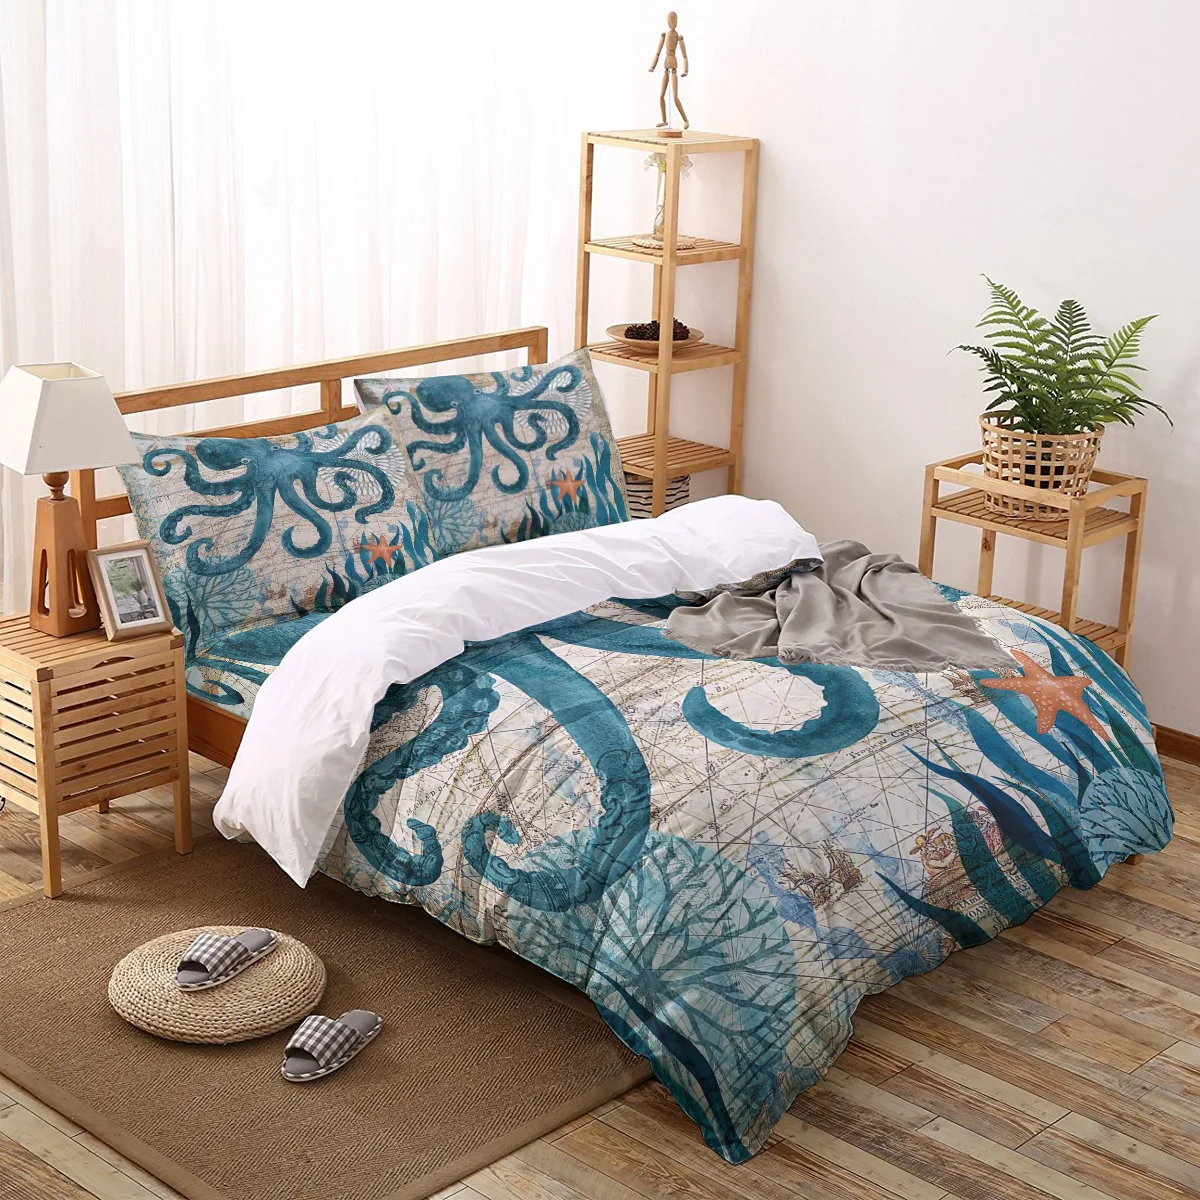 

Octopus Ocean Creature Landscape Printed Comforter Bedding Set Duvet Cover Sets Pillowcases Bedclothes Bed Linen Queen King Size